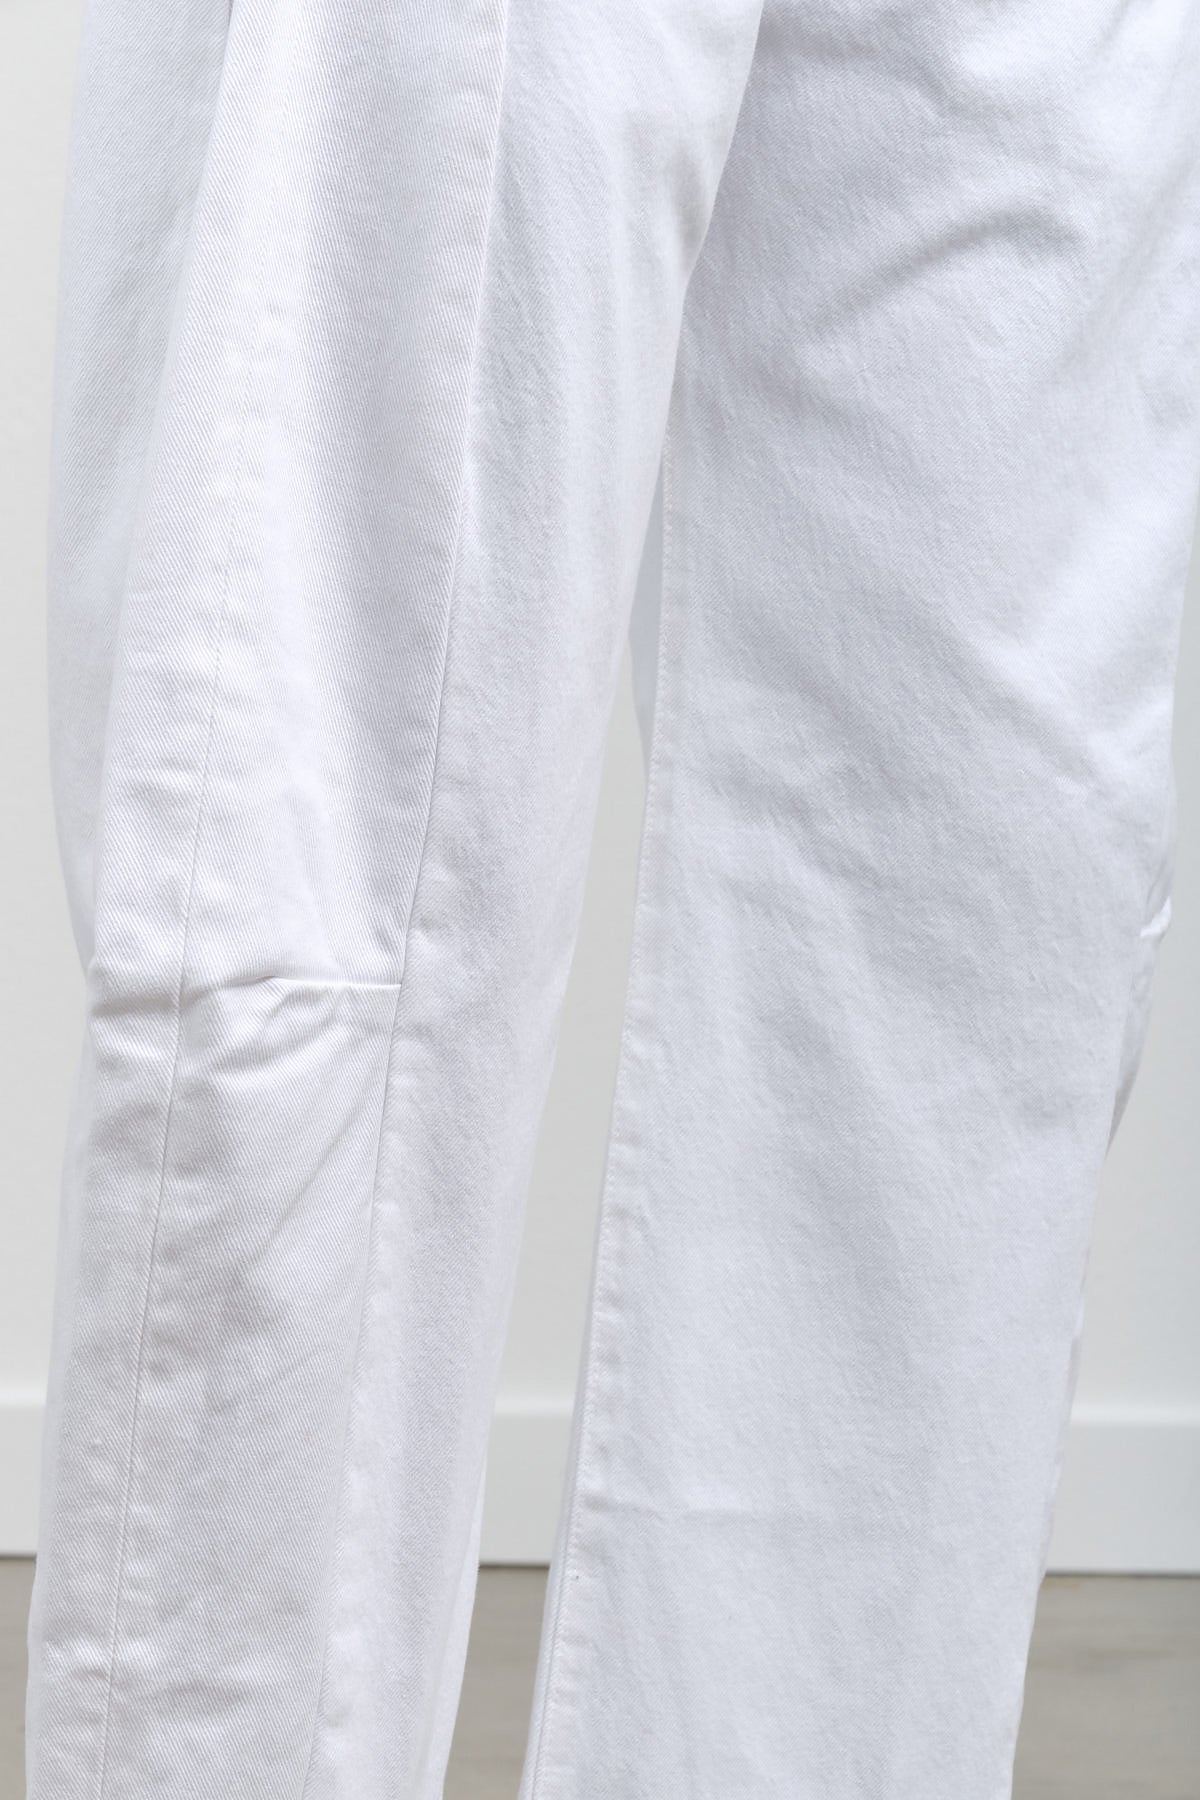 Knee view of Vintage Lasso Jean in Ecru White